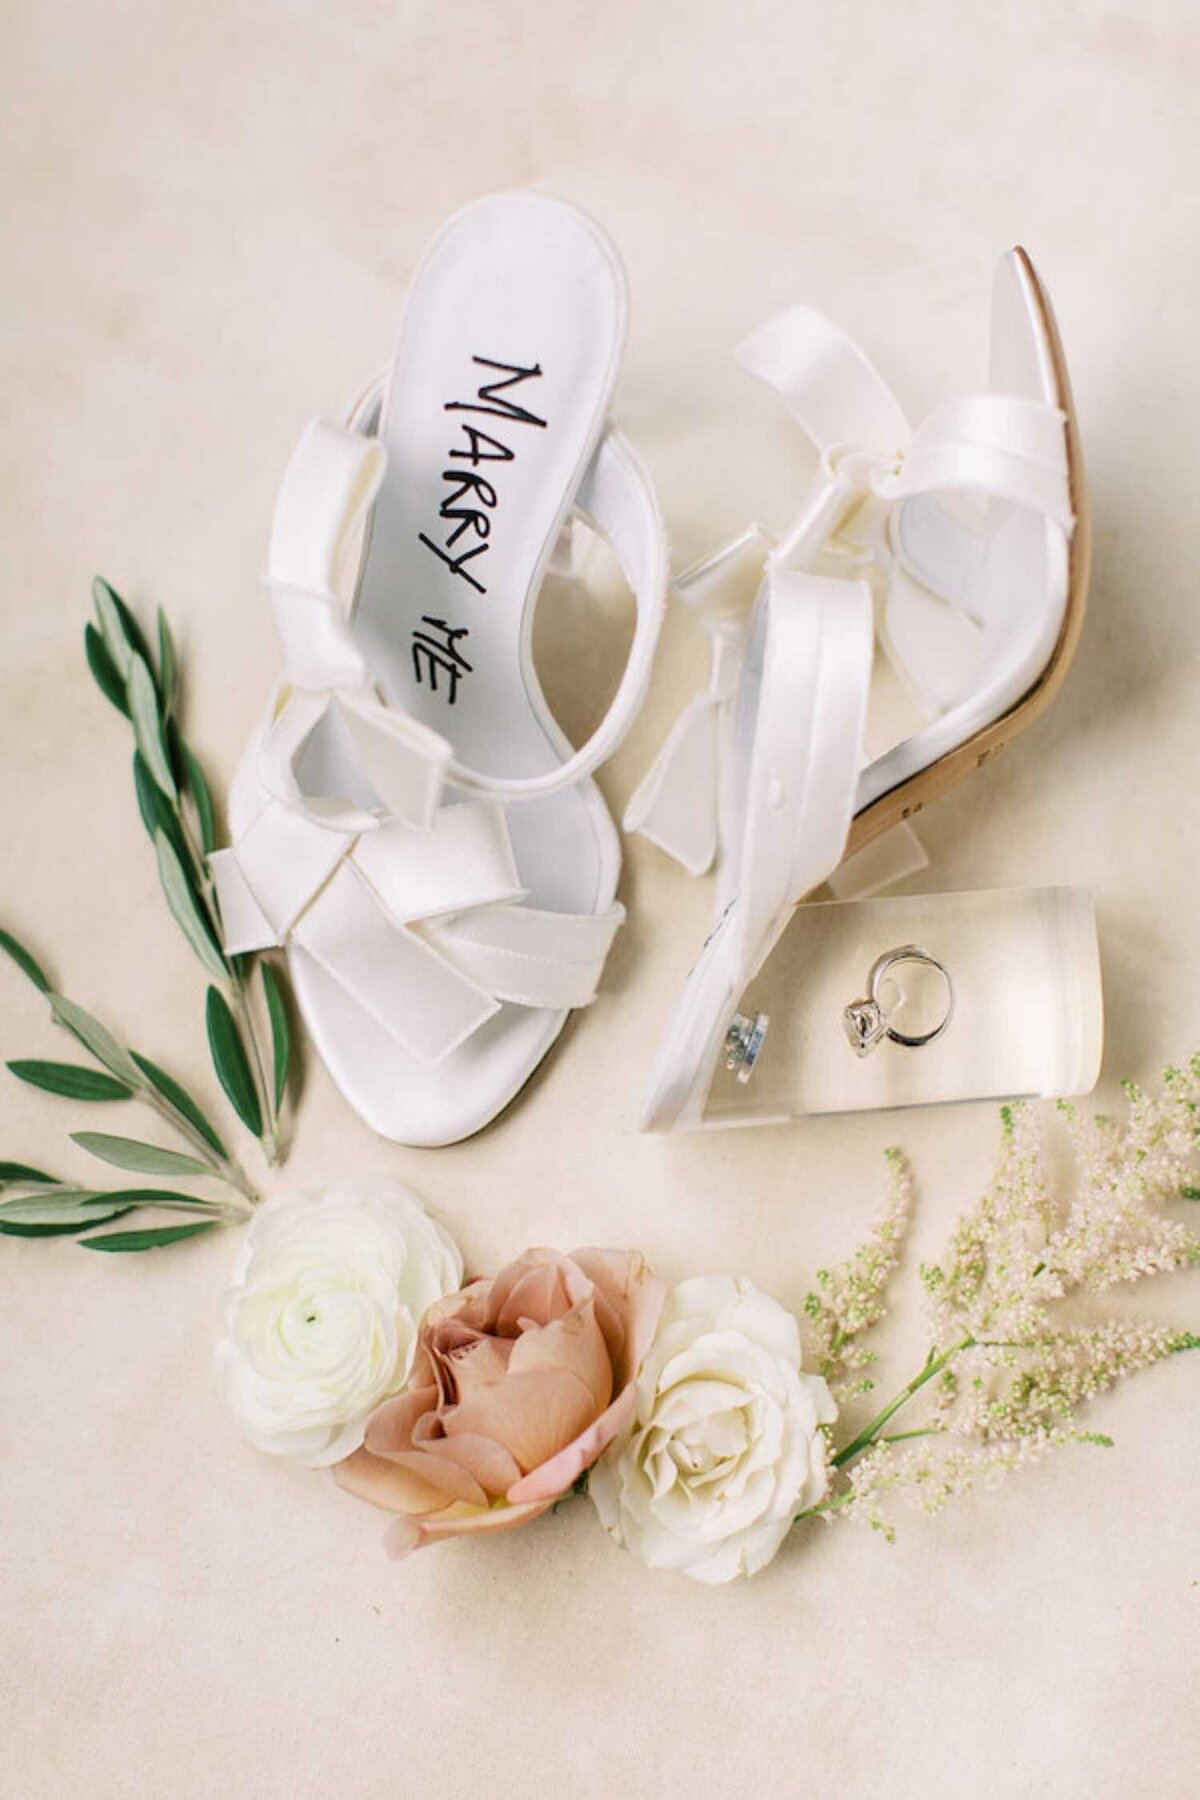 Daring lucite heel bridal shoes at a luxury Chicago outdoor garden wedding..